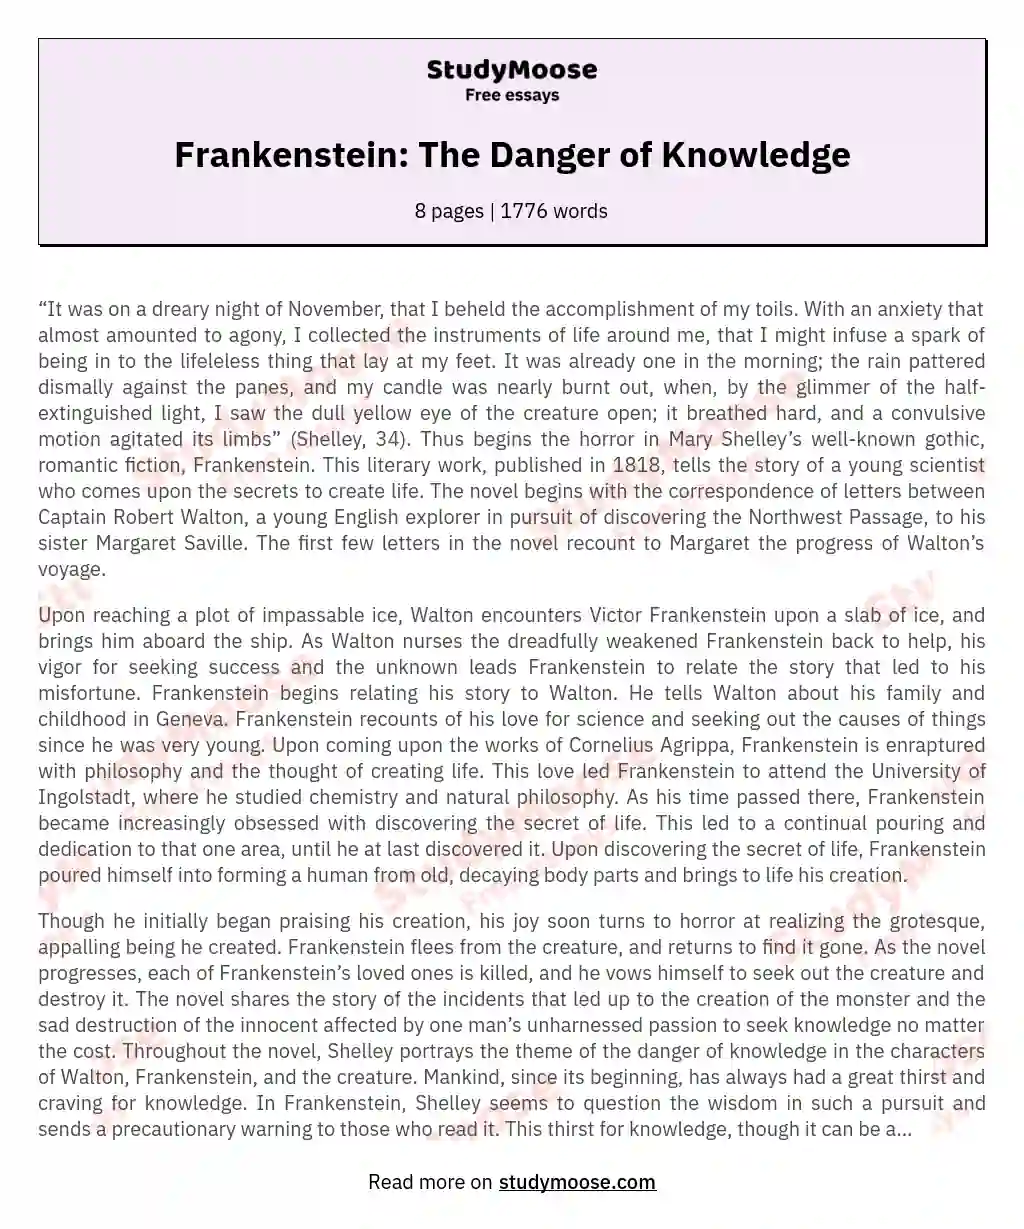 Frankenstein: The Danger of Knowledge essay